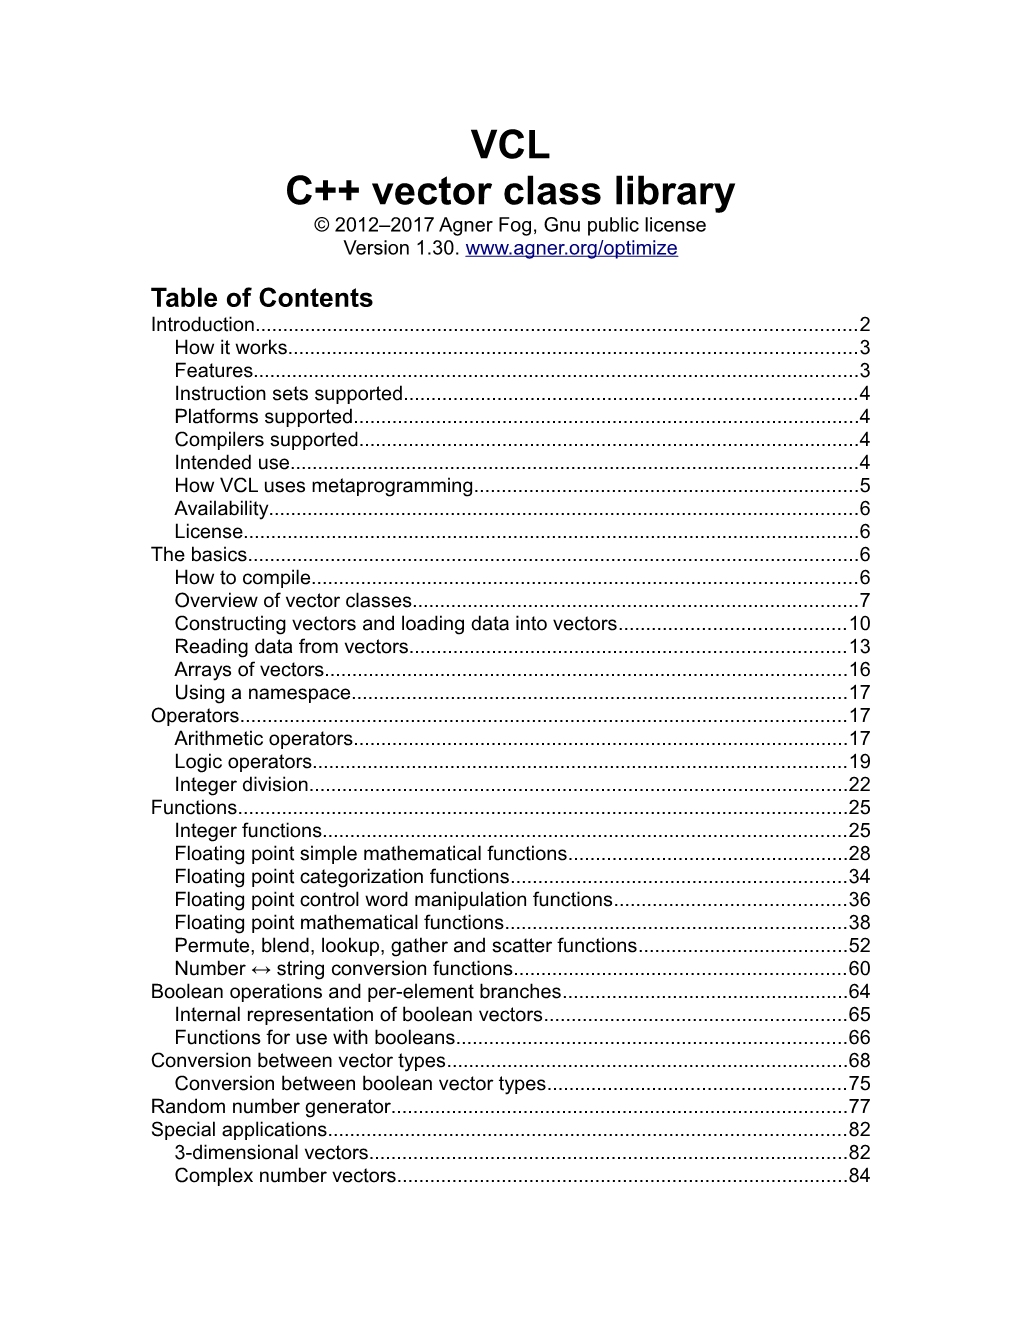 VCL C++ Vector Class Library © 2012–2017 Agner Fog, Gnu Public License Version 1.30